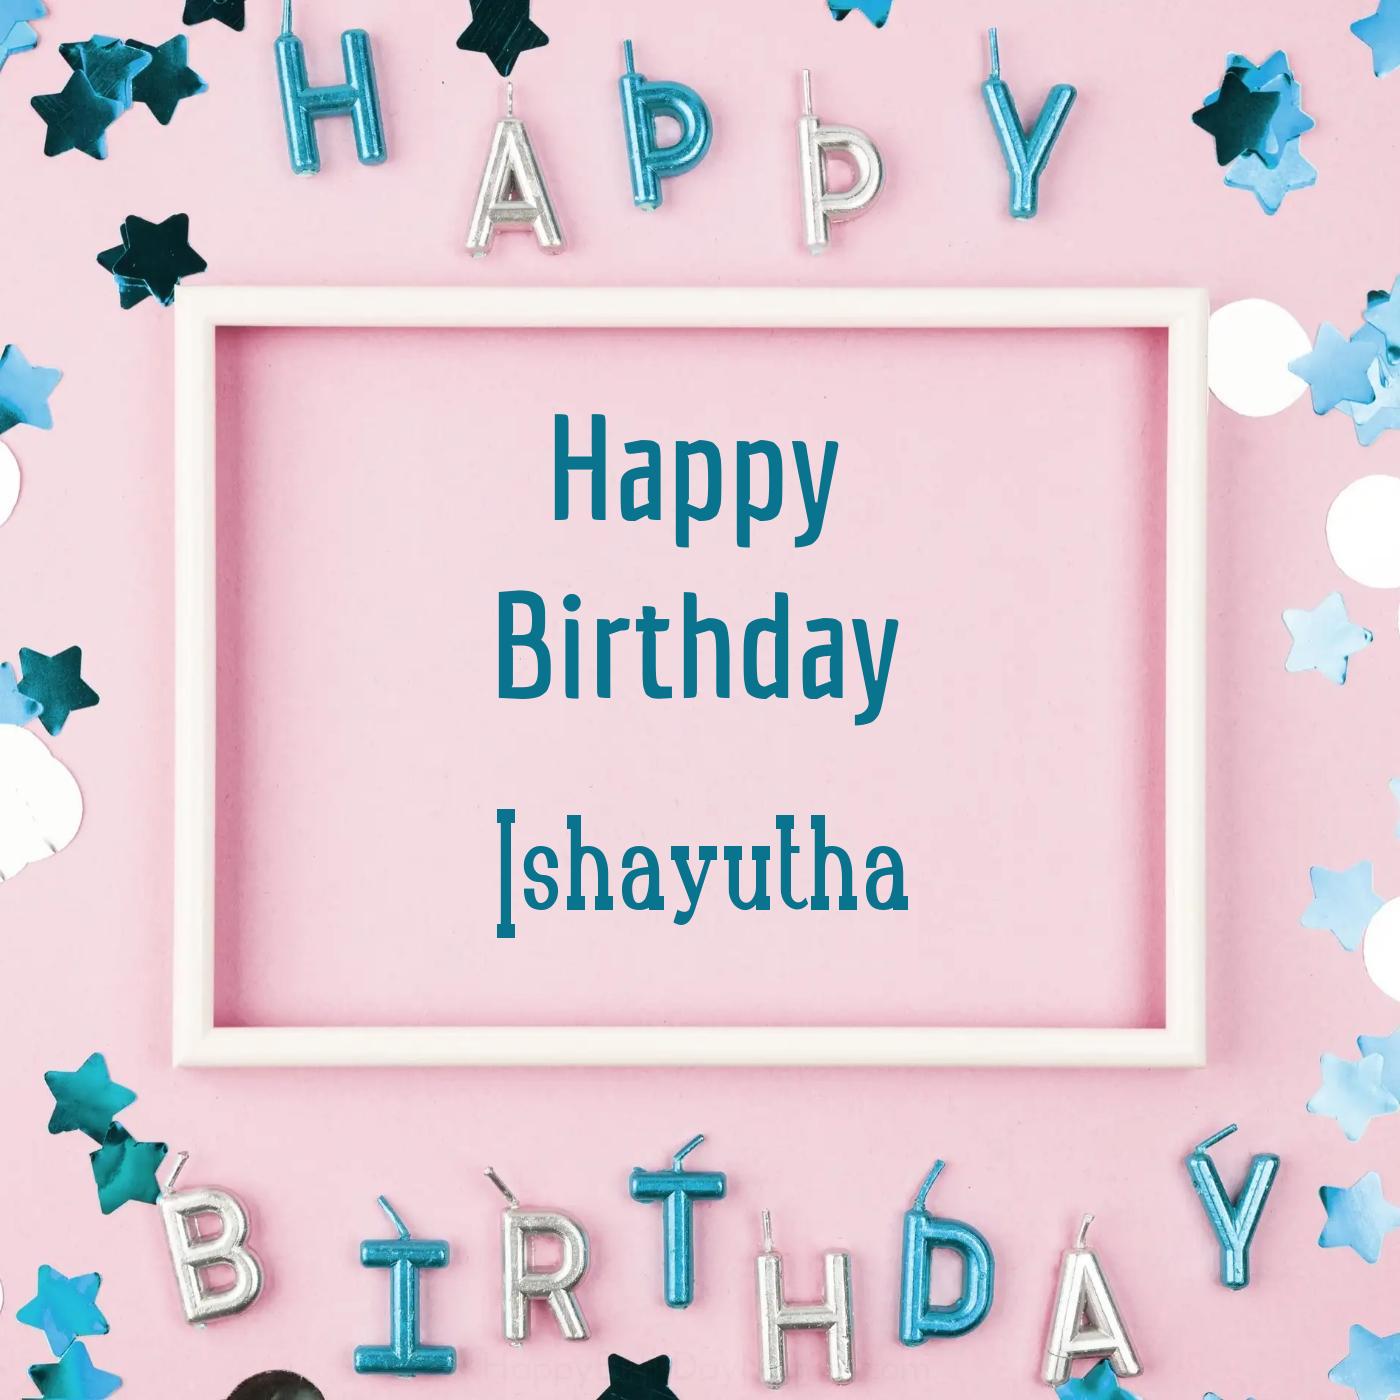 Happy Birthday Ishayutha Pink Frame Card